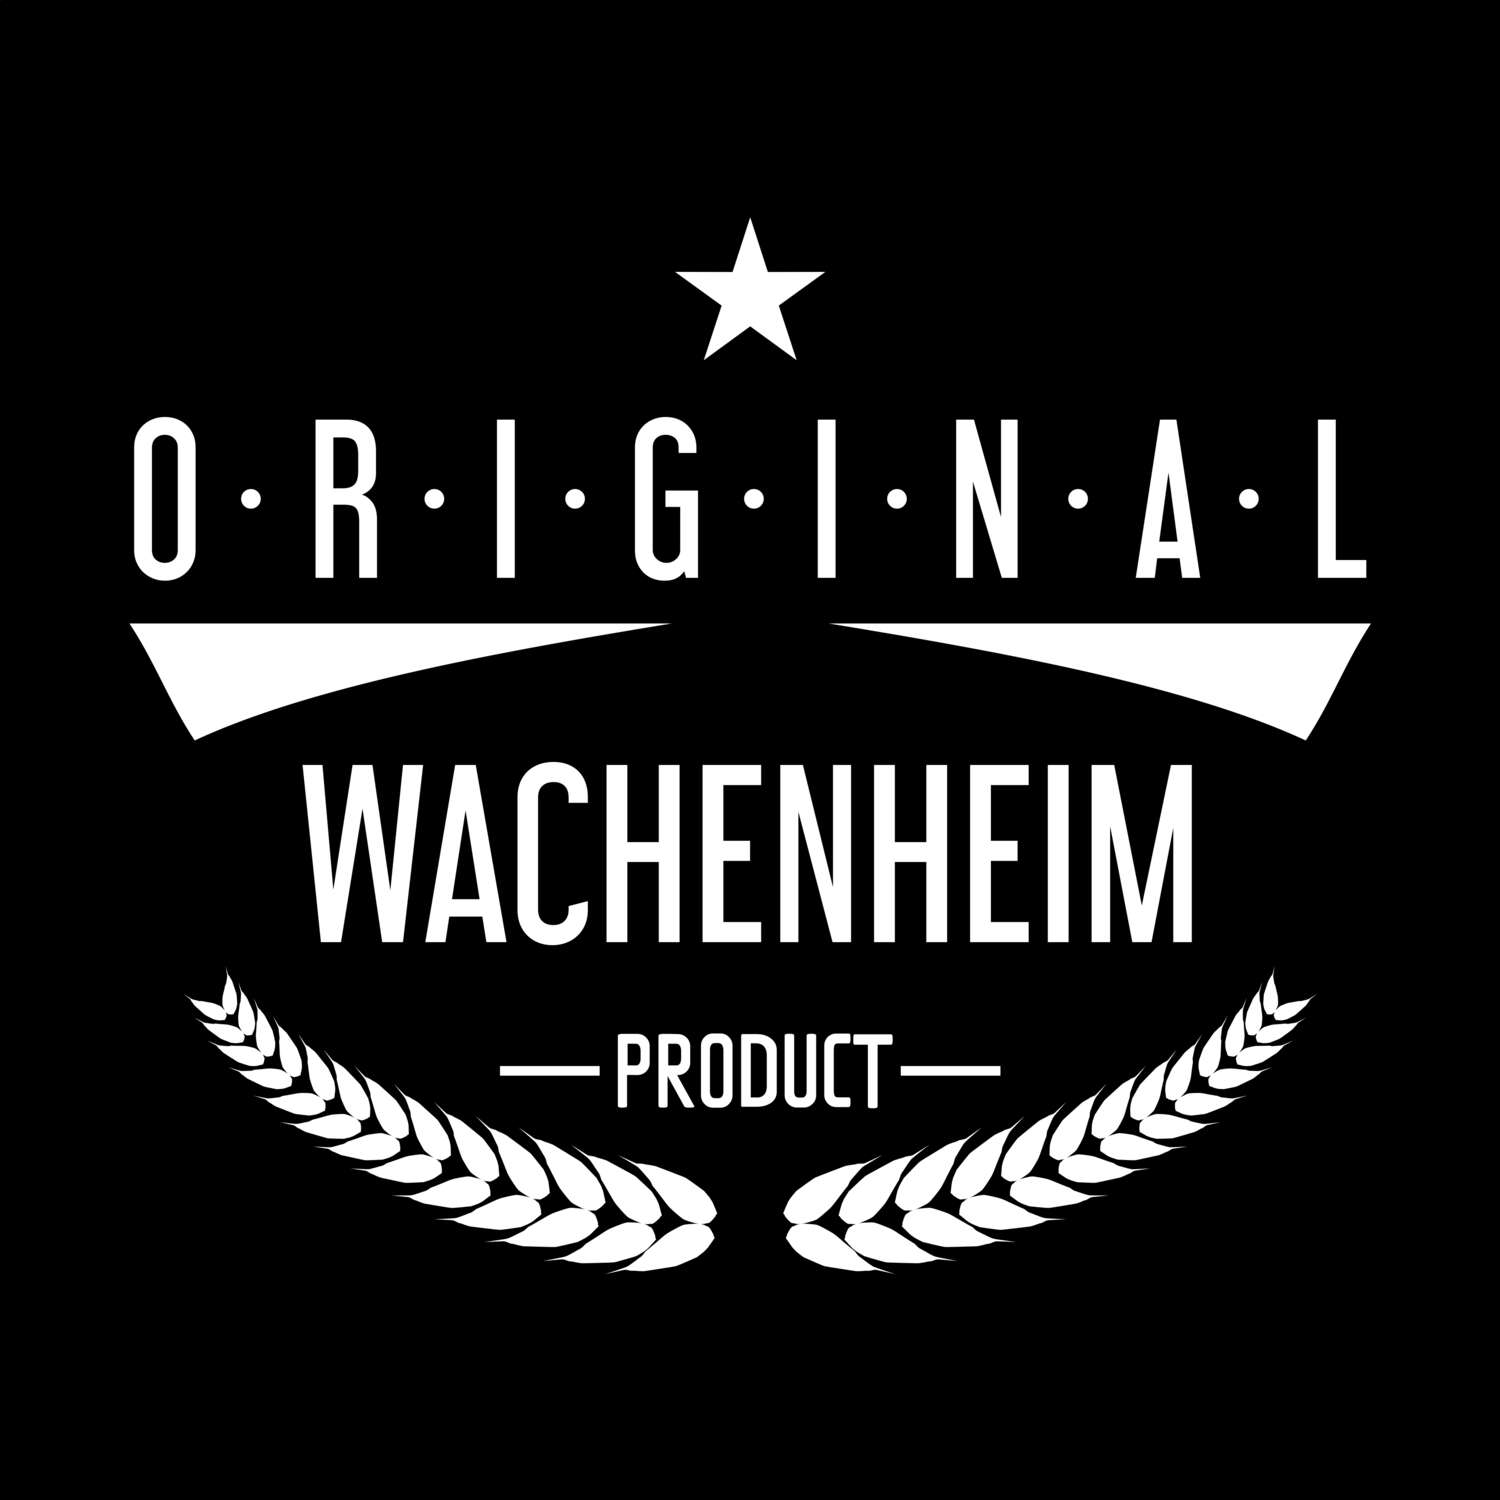 Wachenheim T-Shirt »Original Product«